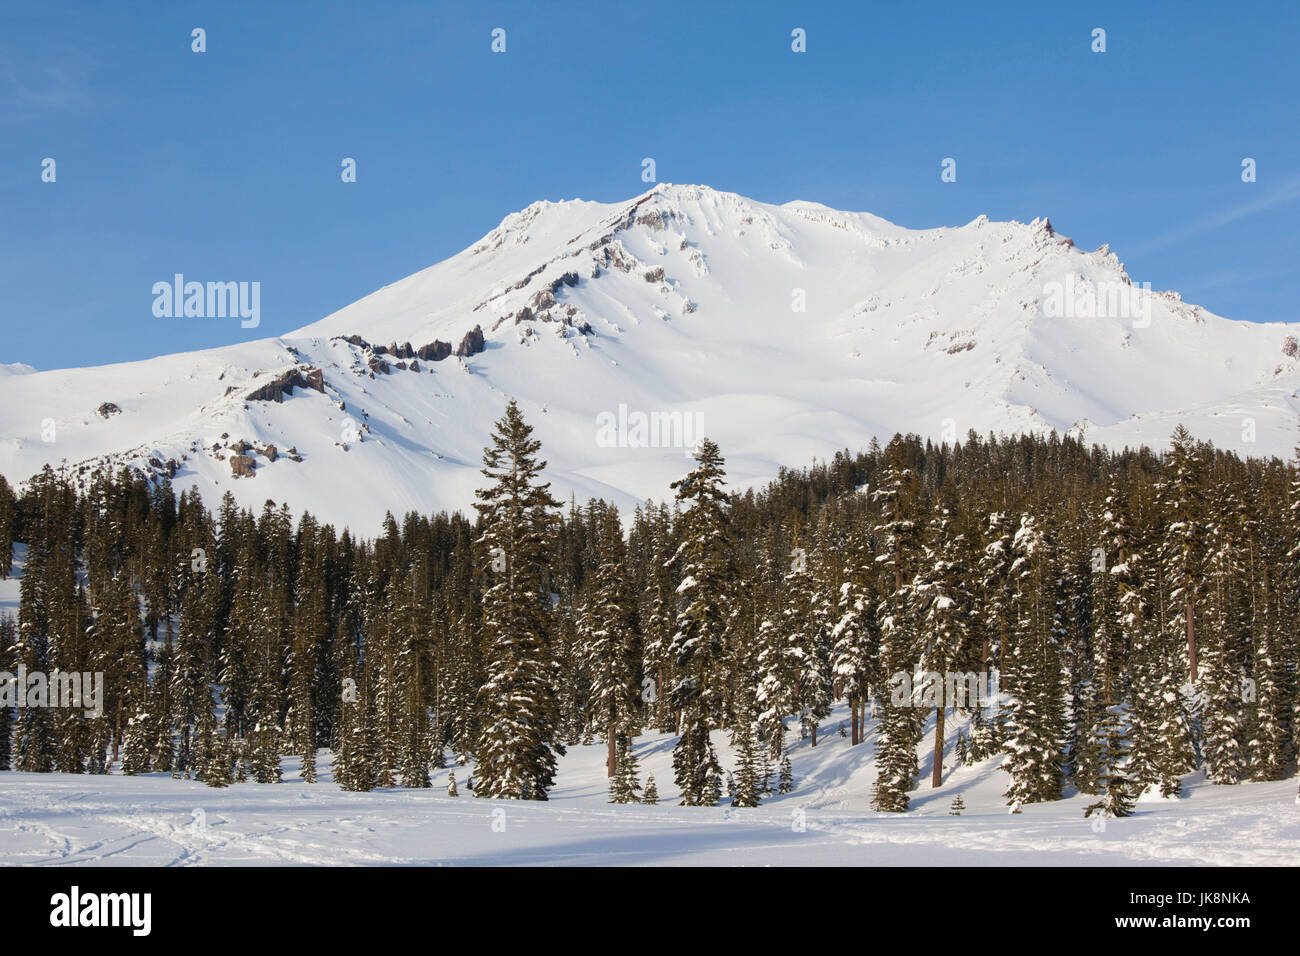 USA, California, Northern California, Northern Mountains, Mount Shasta, view of Mt. Shasta, elevation 14,162 feet Stock Photo